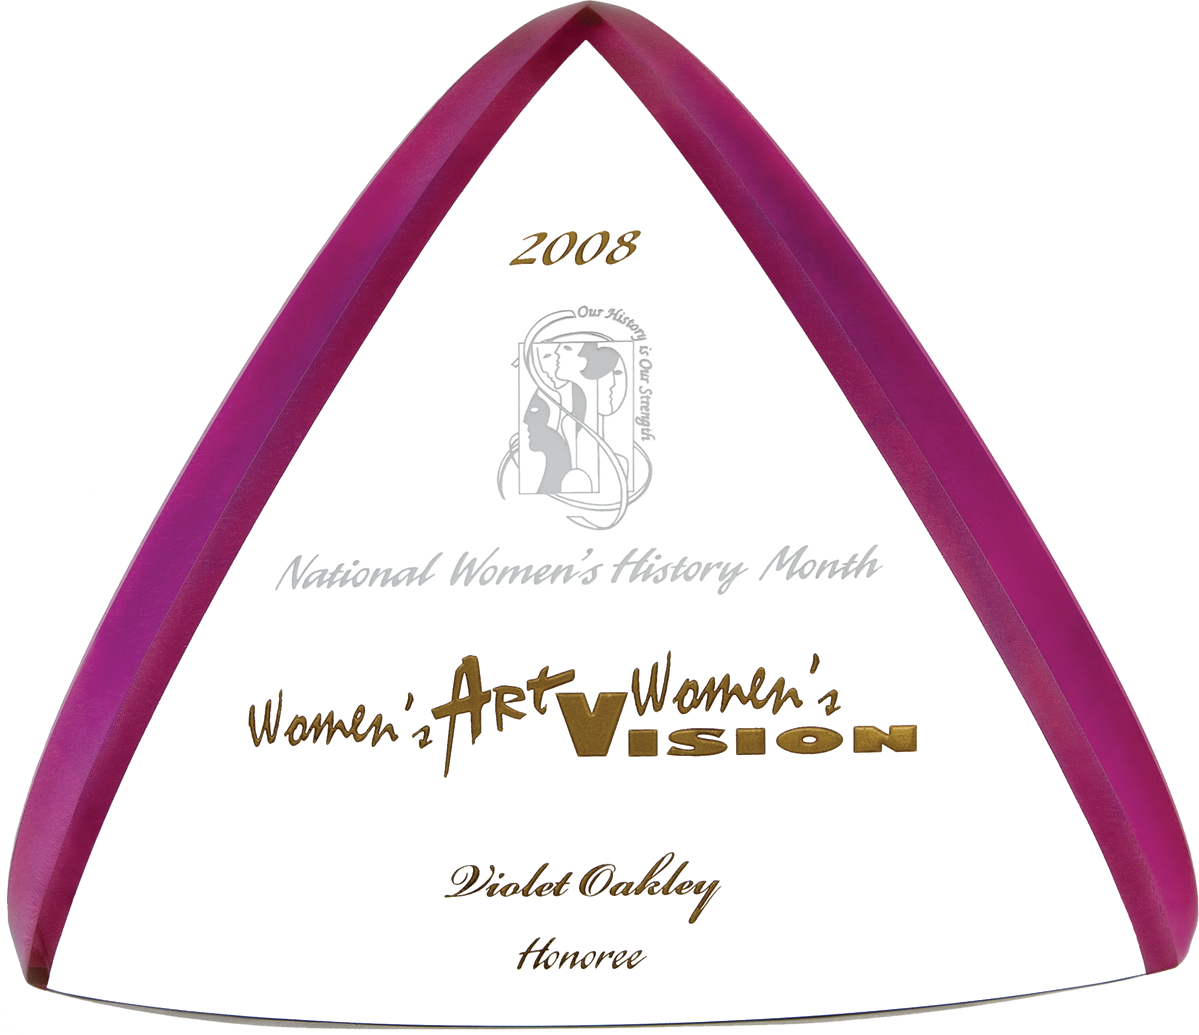 National Women's History Month Women's Art: Women's Vision Award Honoring Capitol Artist Violet Oakley